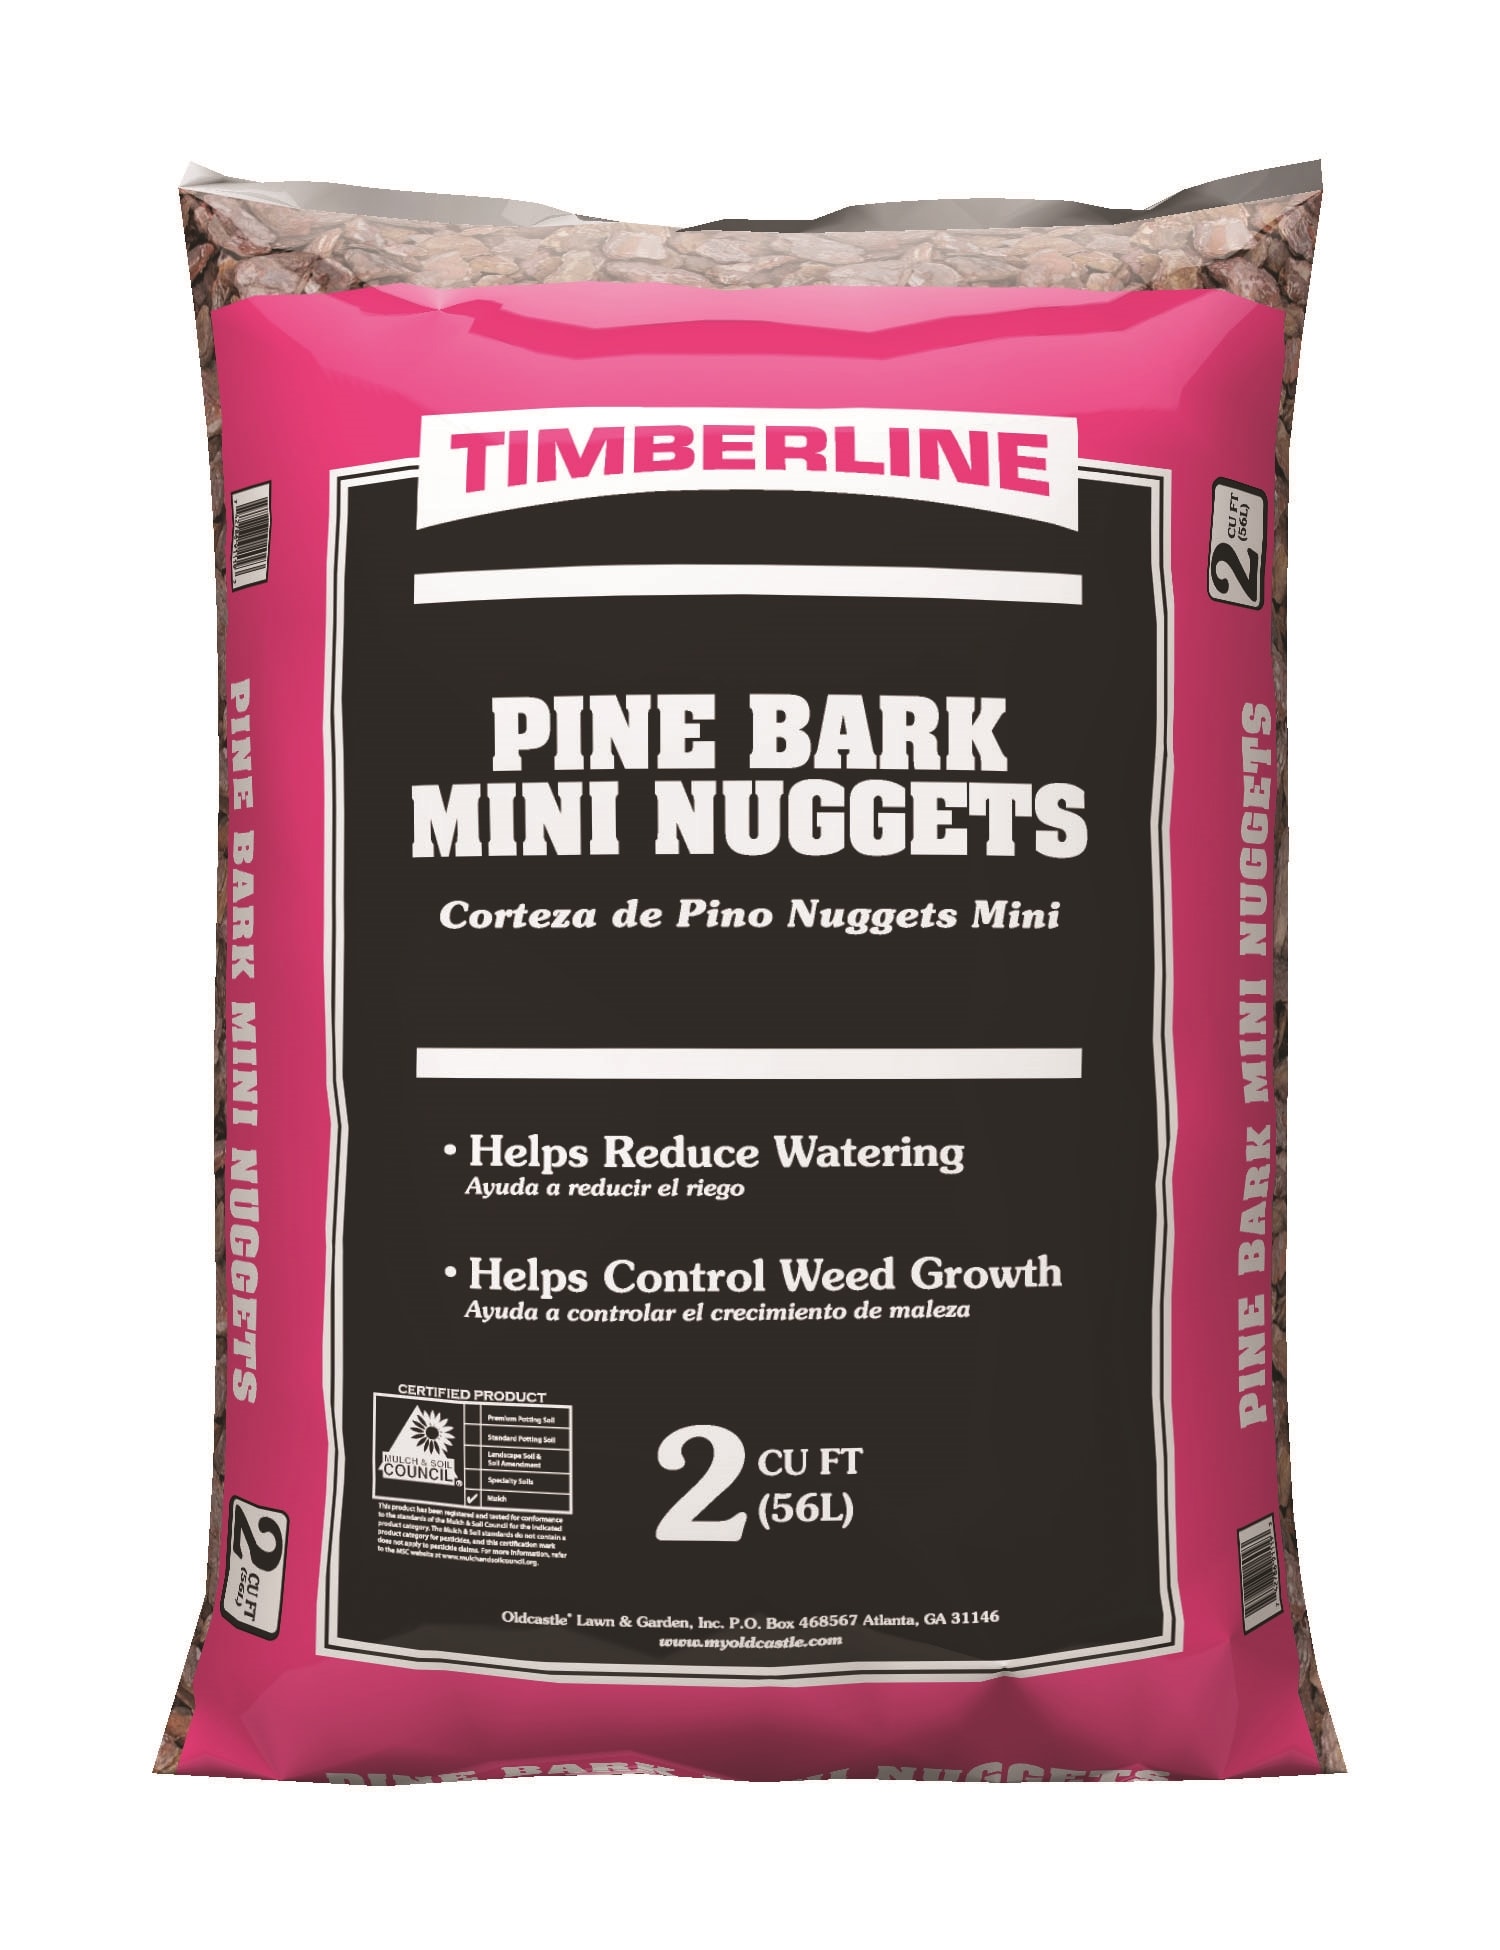 Pine bark mini nuggets Bagged Mulch at